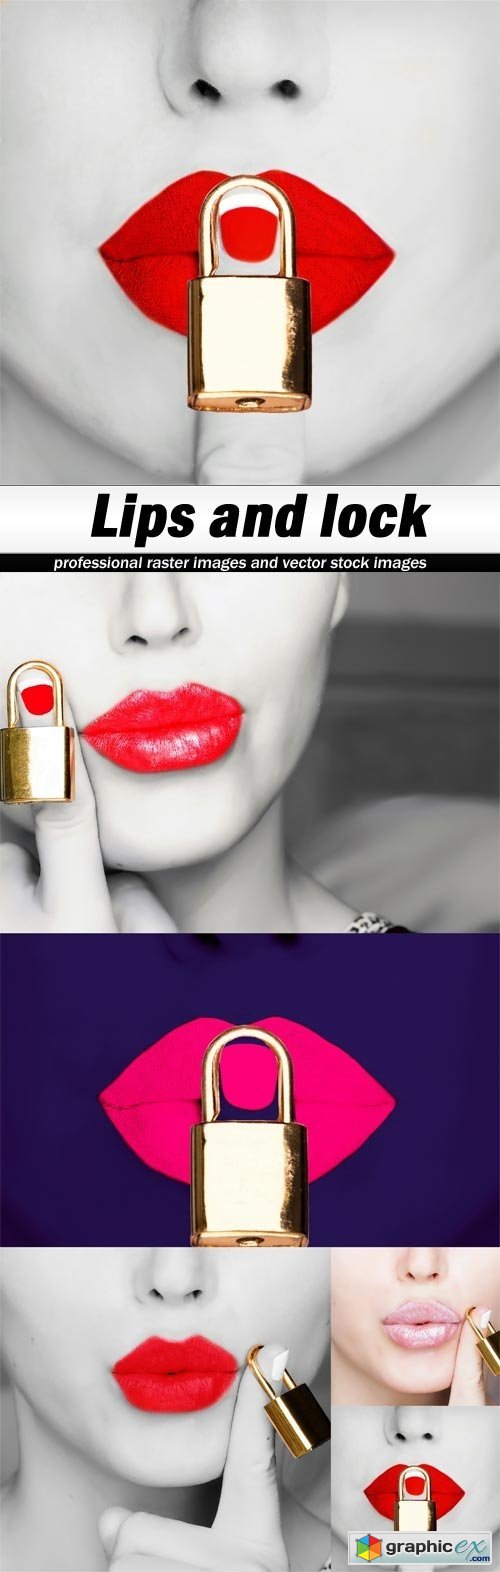 Lips and lock-5xJPEGs